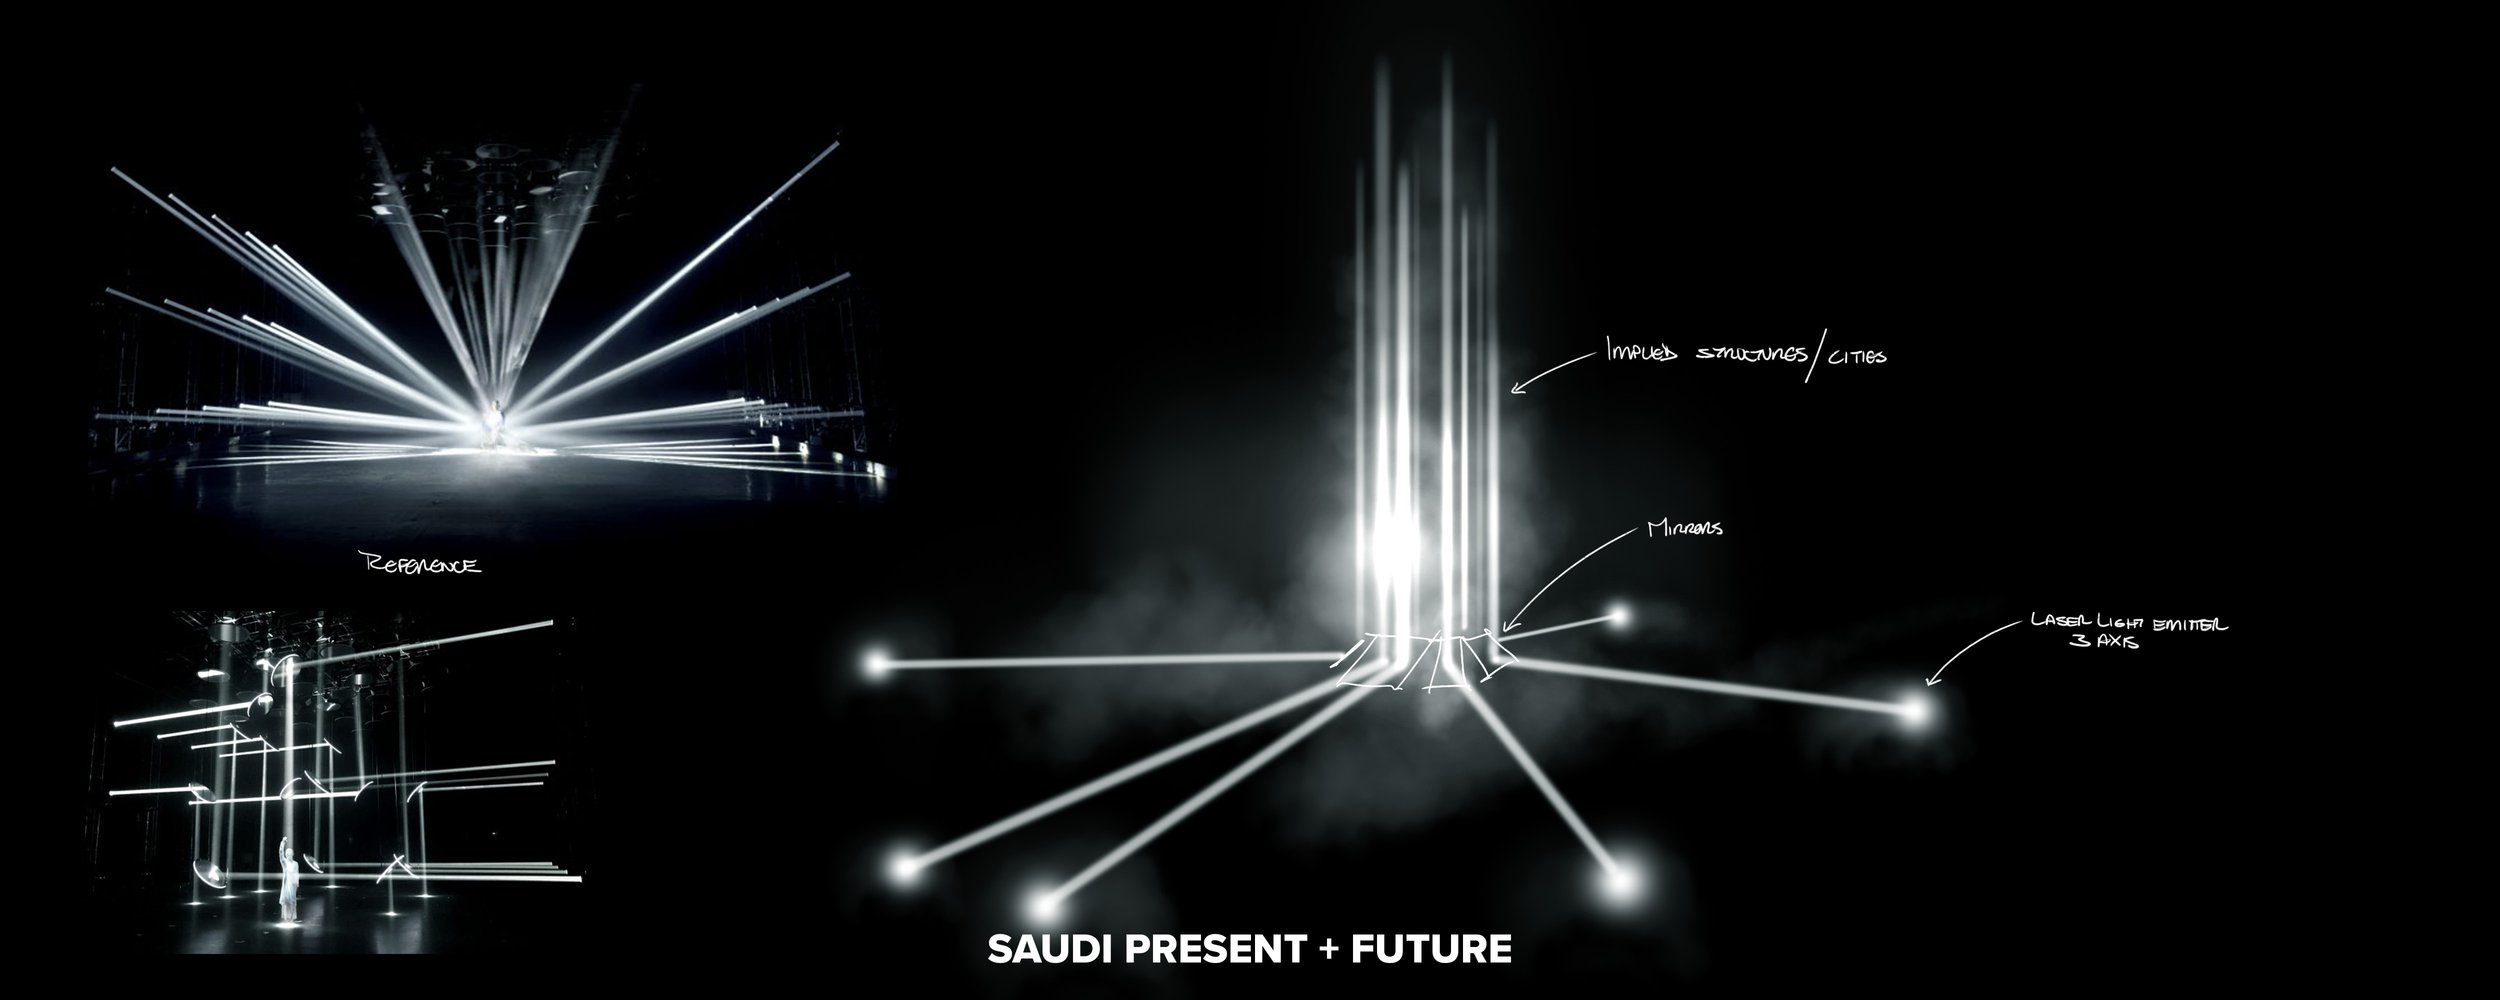 7 Saudi Present Future Light Structure.jpg